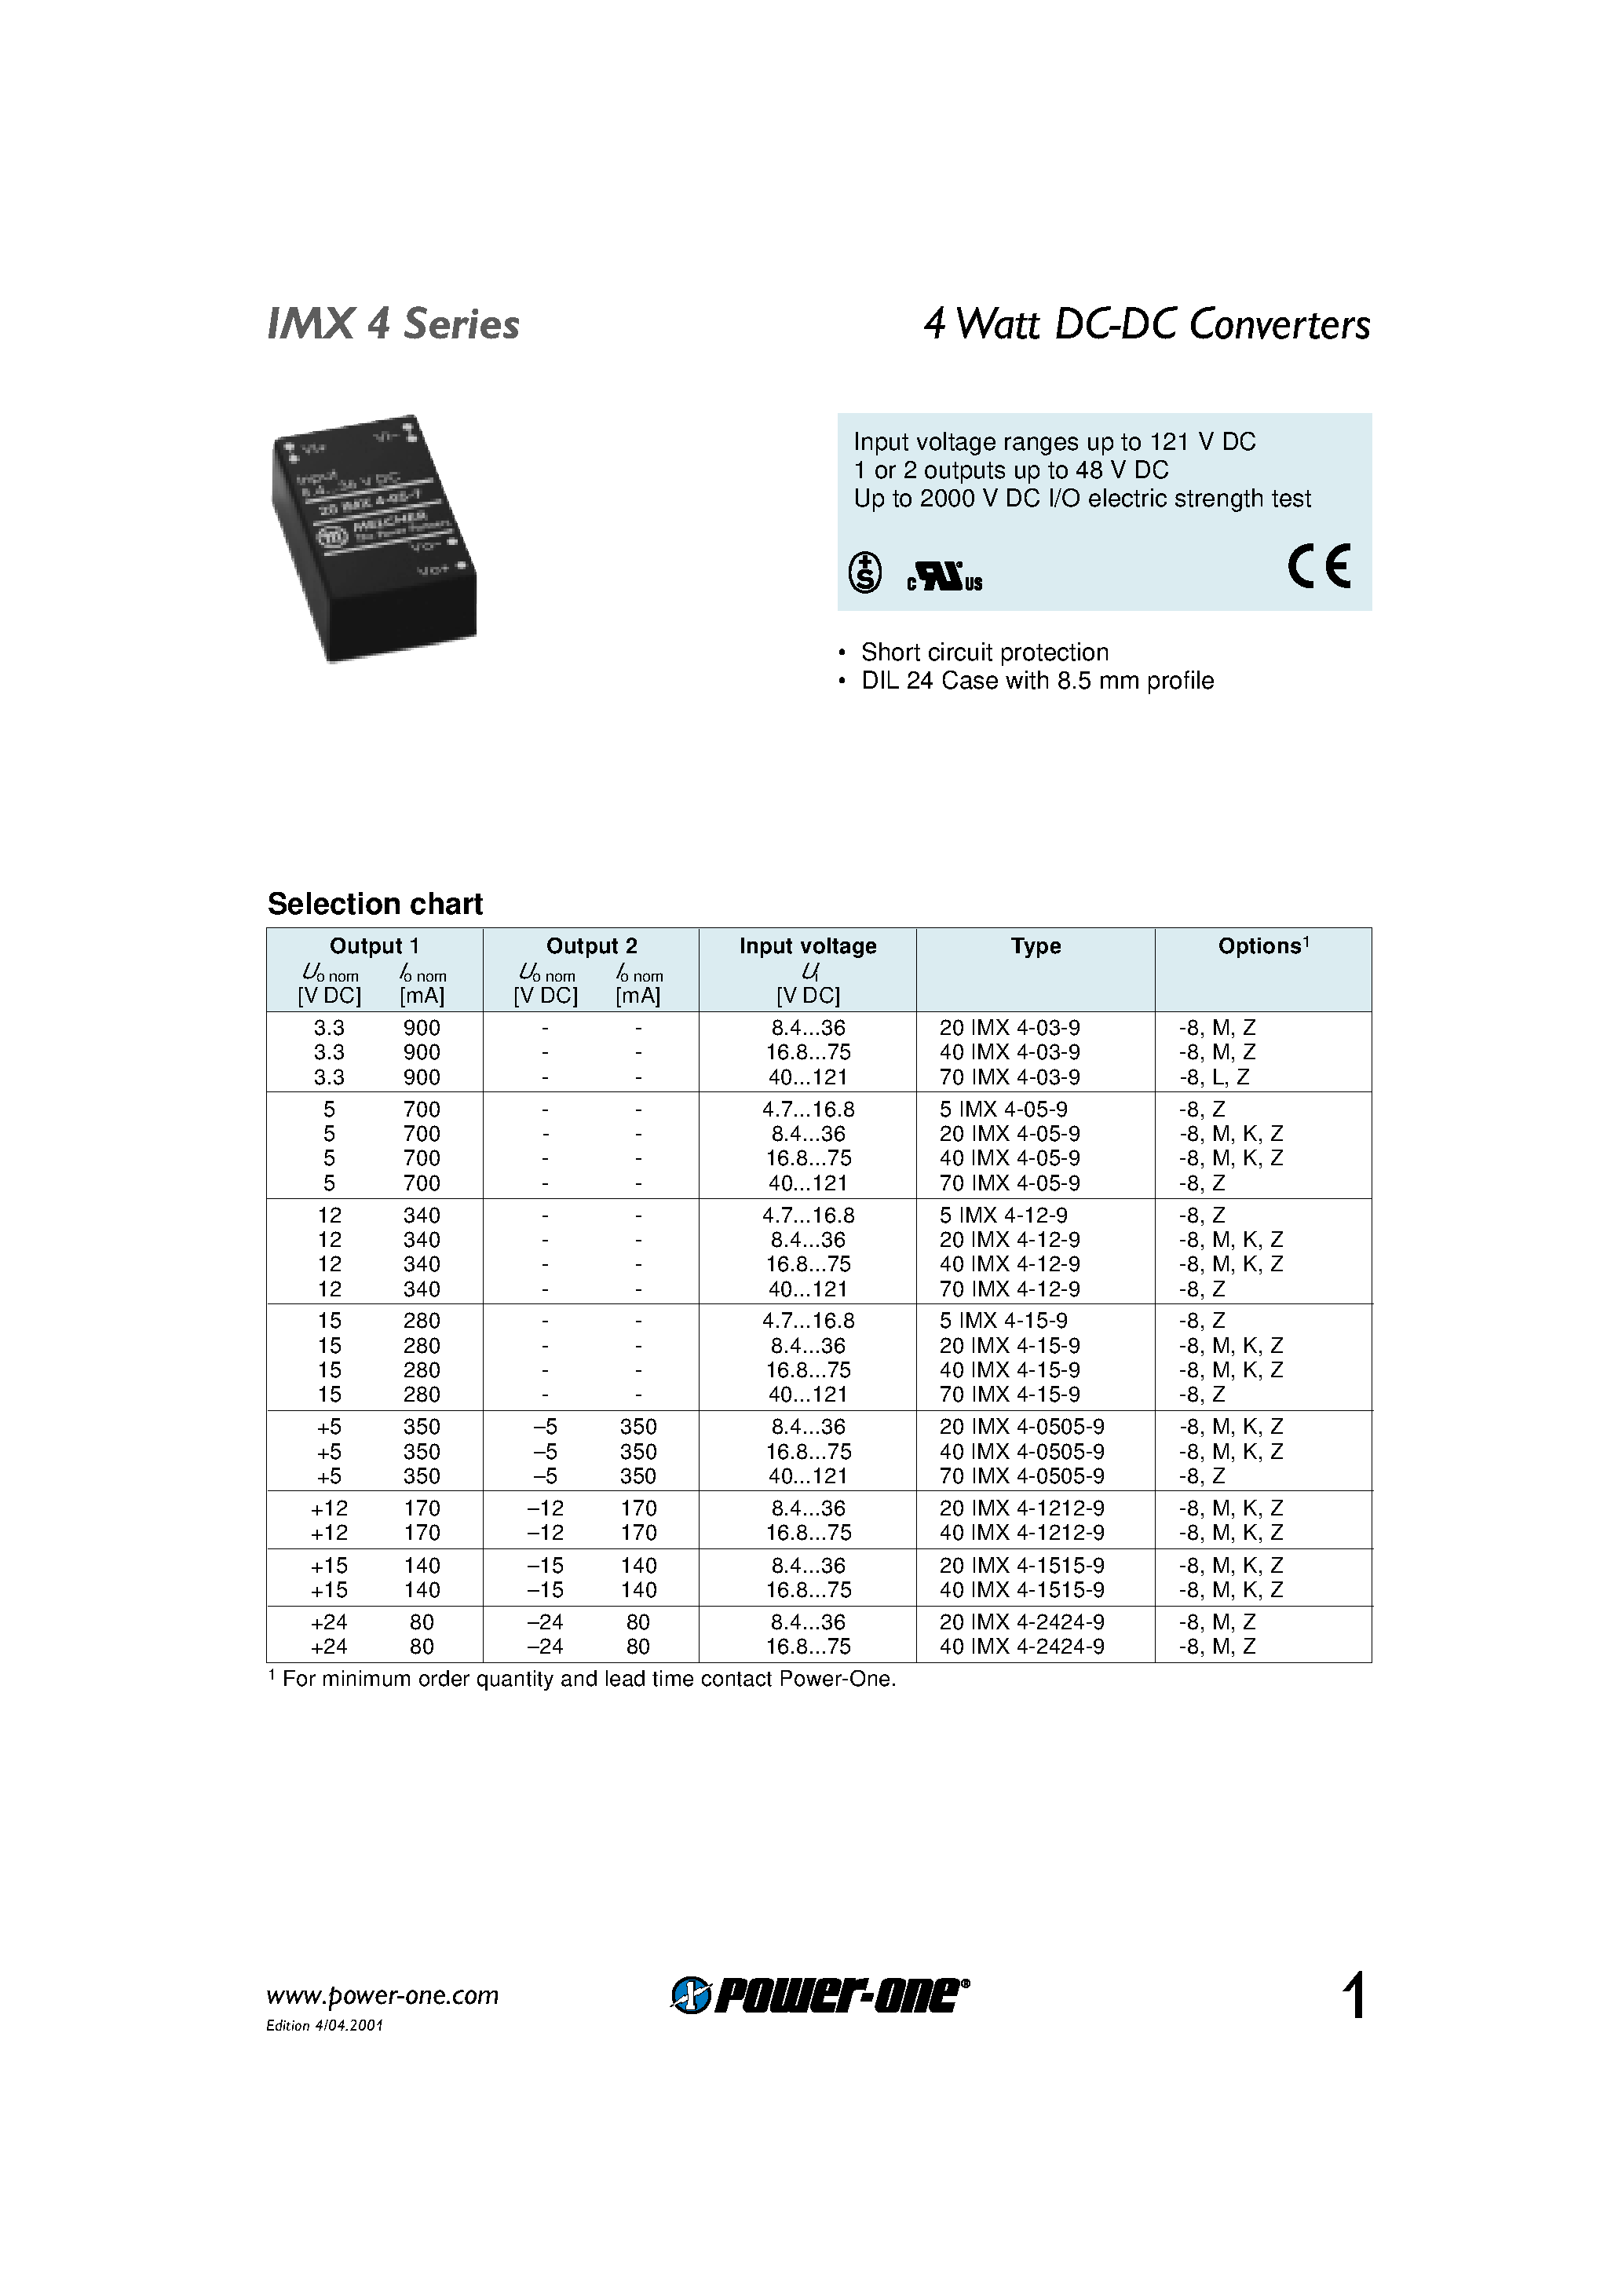 Даташит 70IMX4-0505-9 - 4 Watt DC-DC Converters страница 1